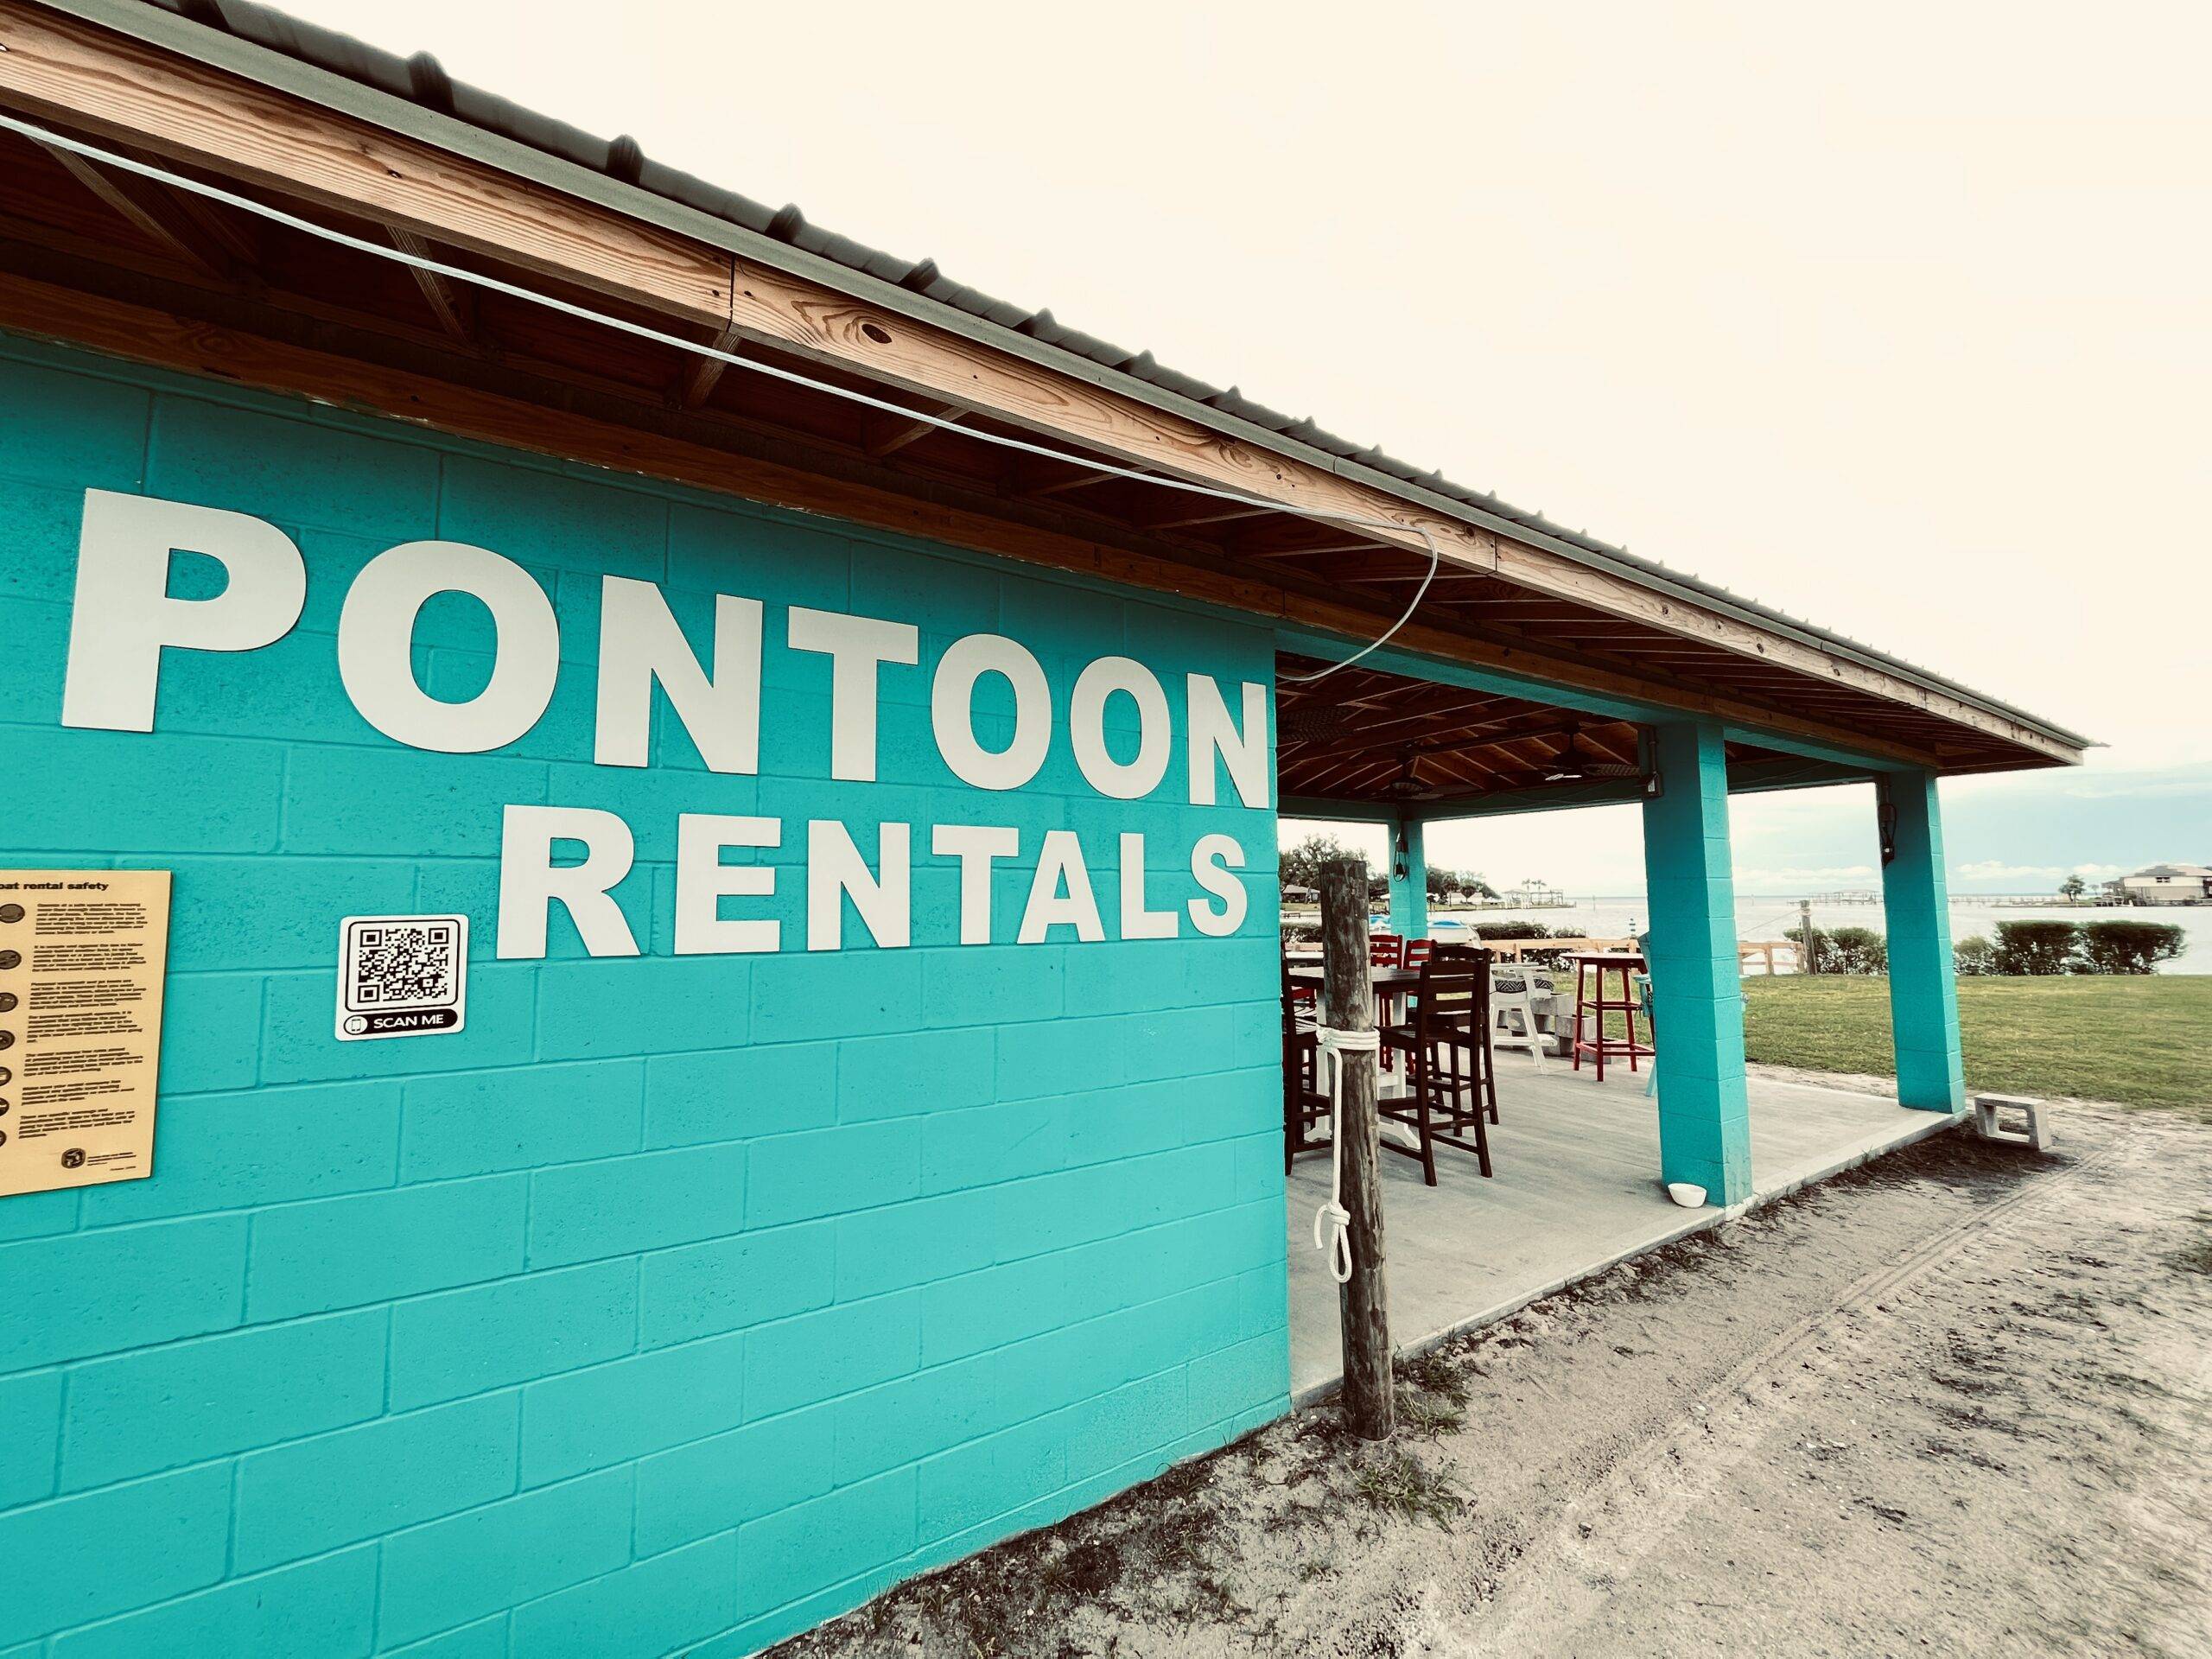 Vibrant turquoise shack advertising Pontoon Rentals, inviting you to aquatic adventures.